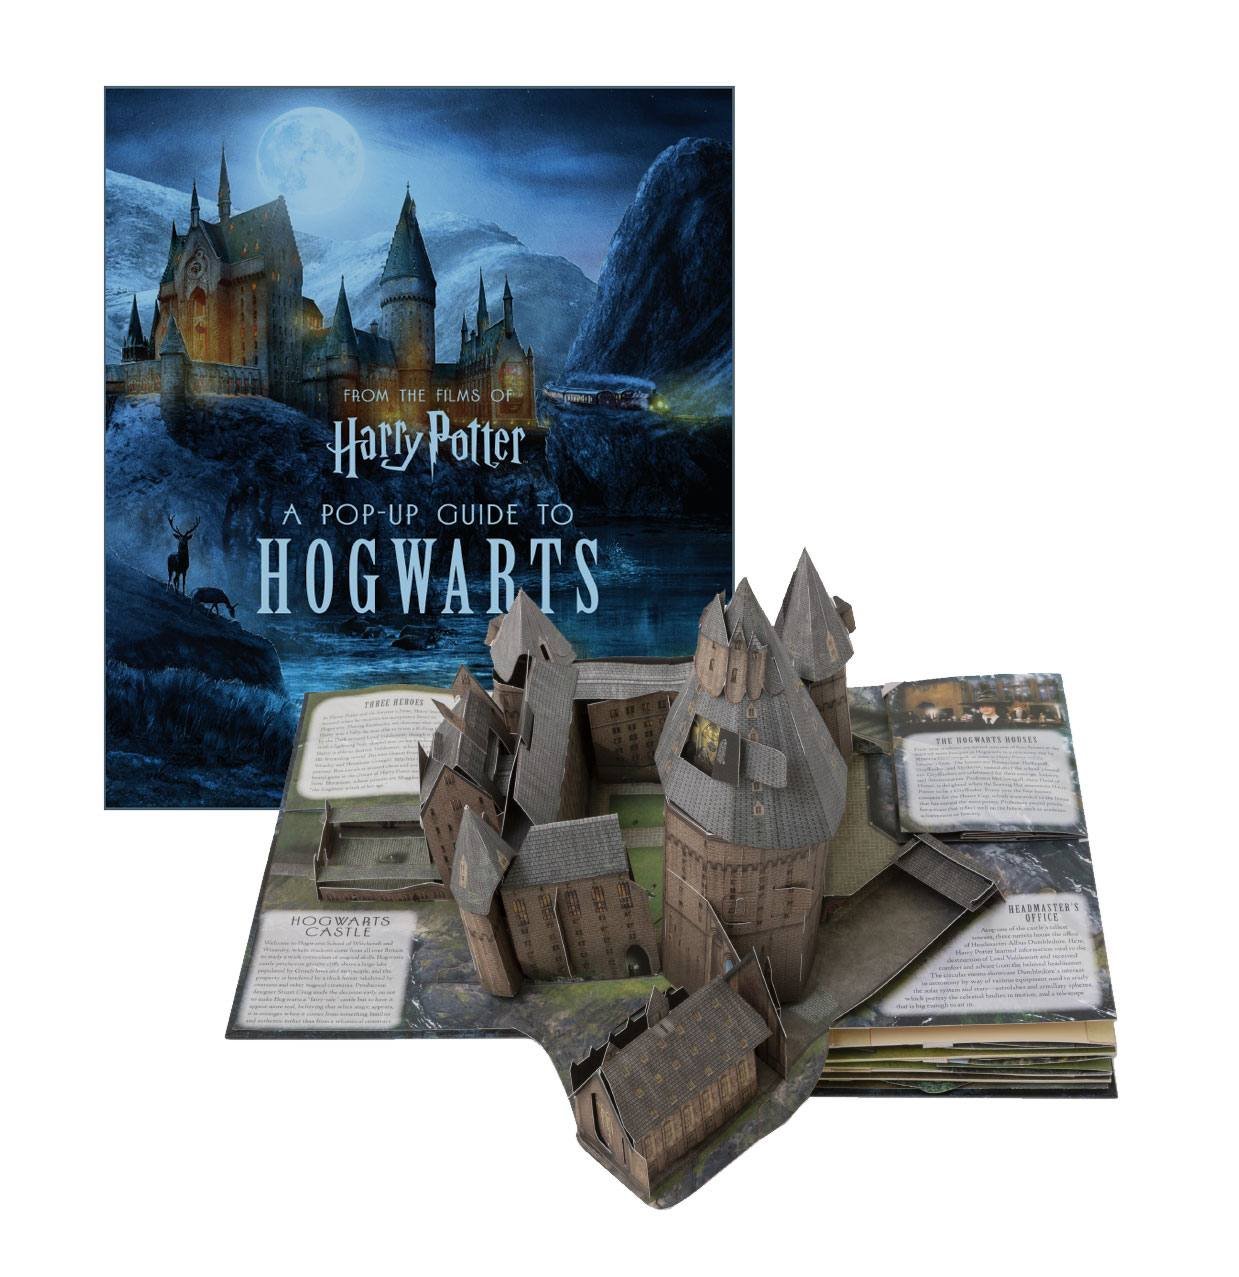 Postbud race ide Harry potter 3d pop-up book a pop-up guide to hogwarts